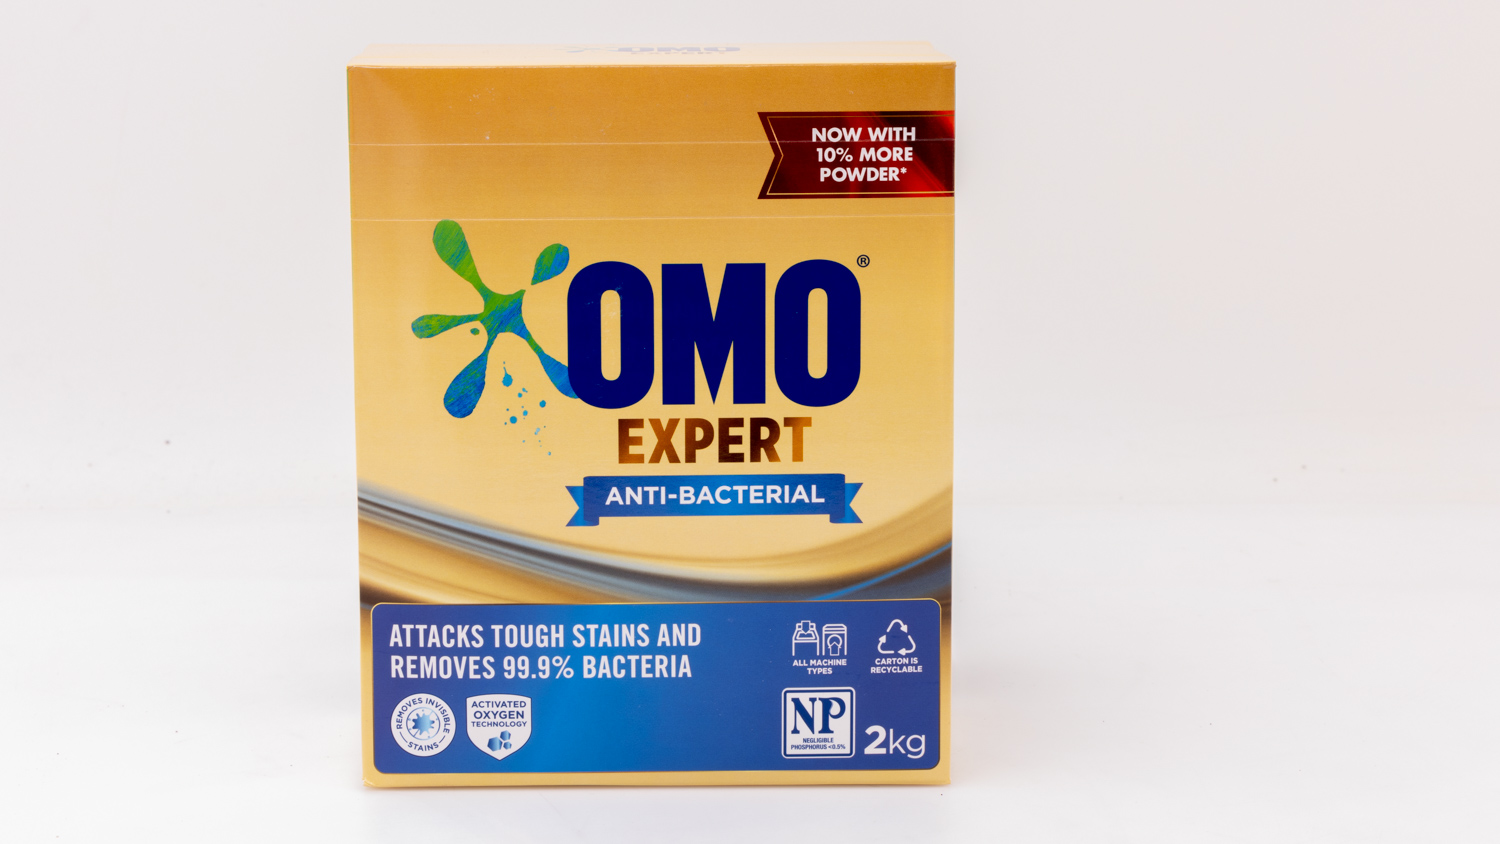 Omo Expert Anti-Bacterial Powder Front Loader carousel image